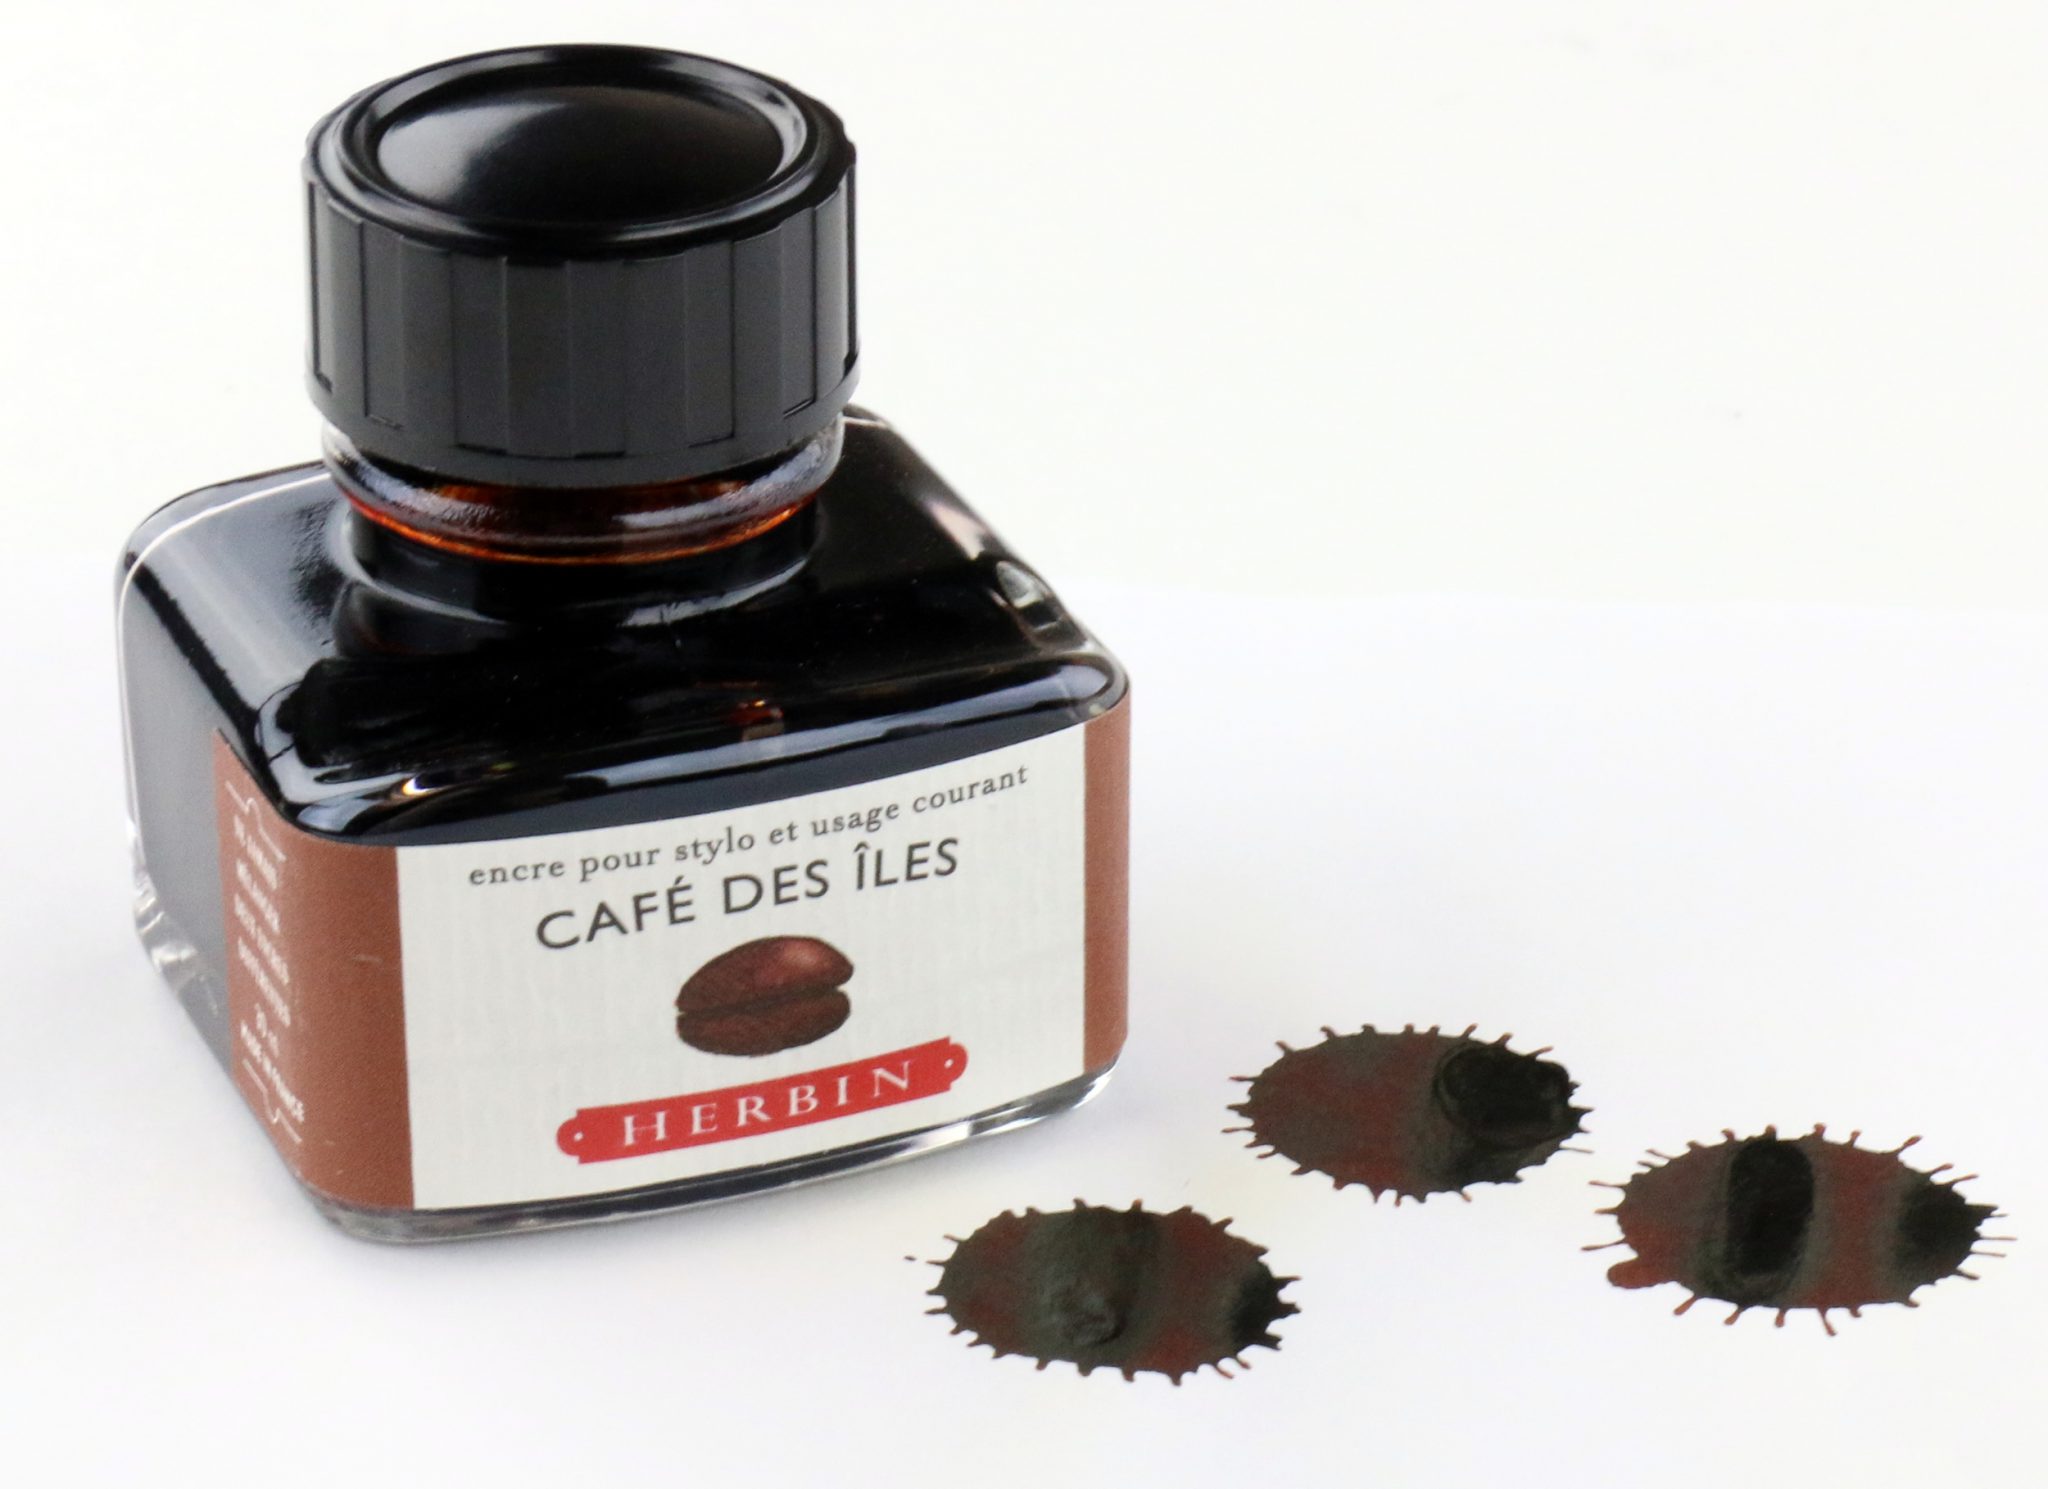 j-herbin-caf-des-iles-fountain-pen-ink-review-giveaway-pen-chalet